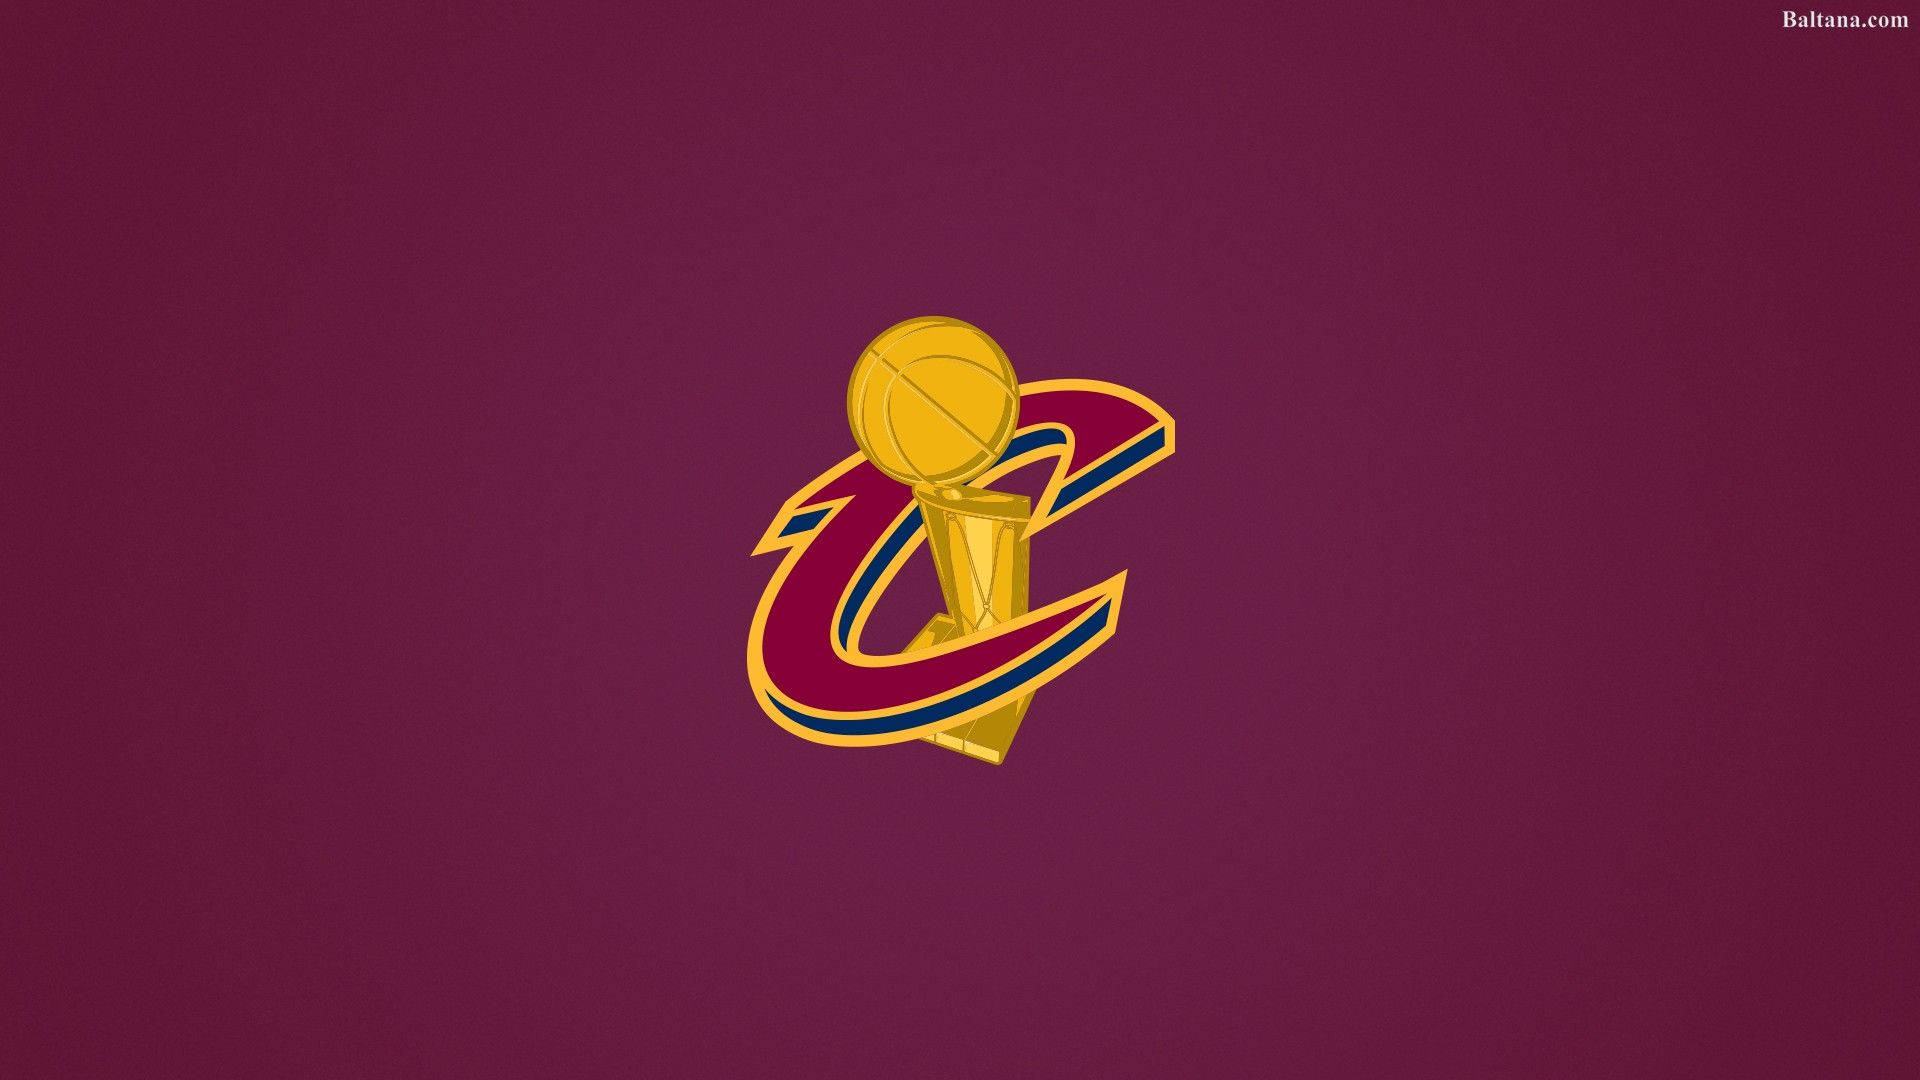 Cleveland Cavaliers Championship Trophy Logo